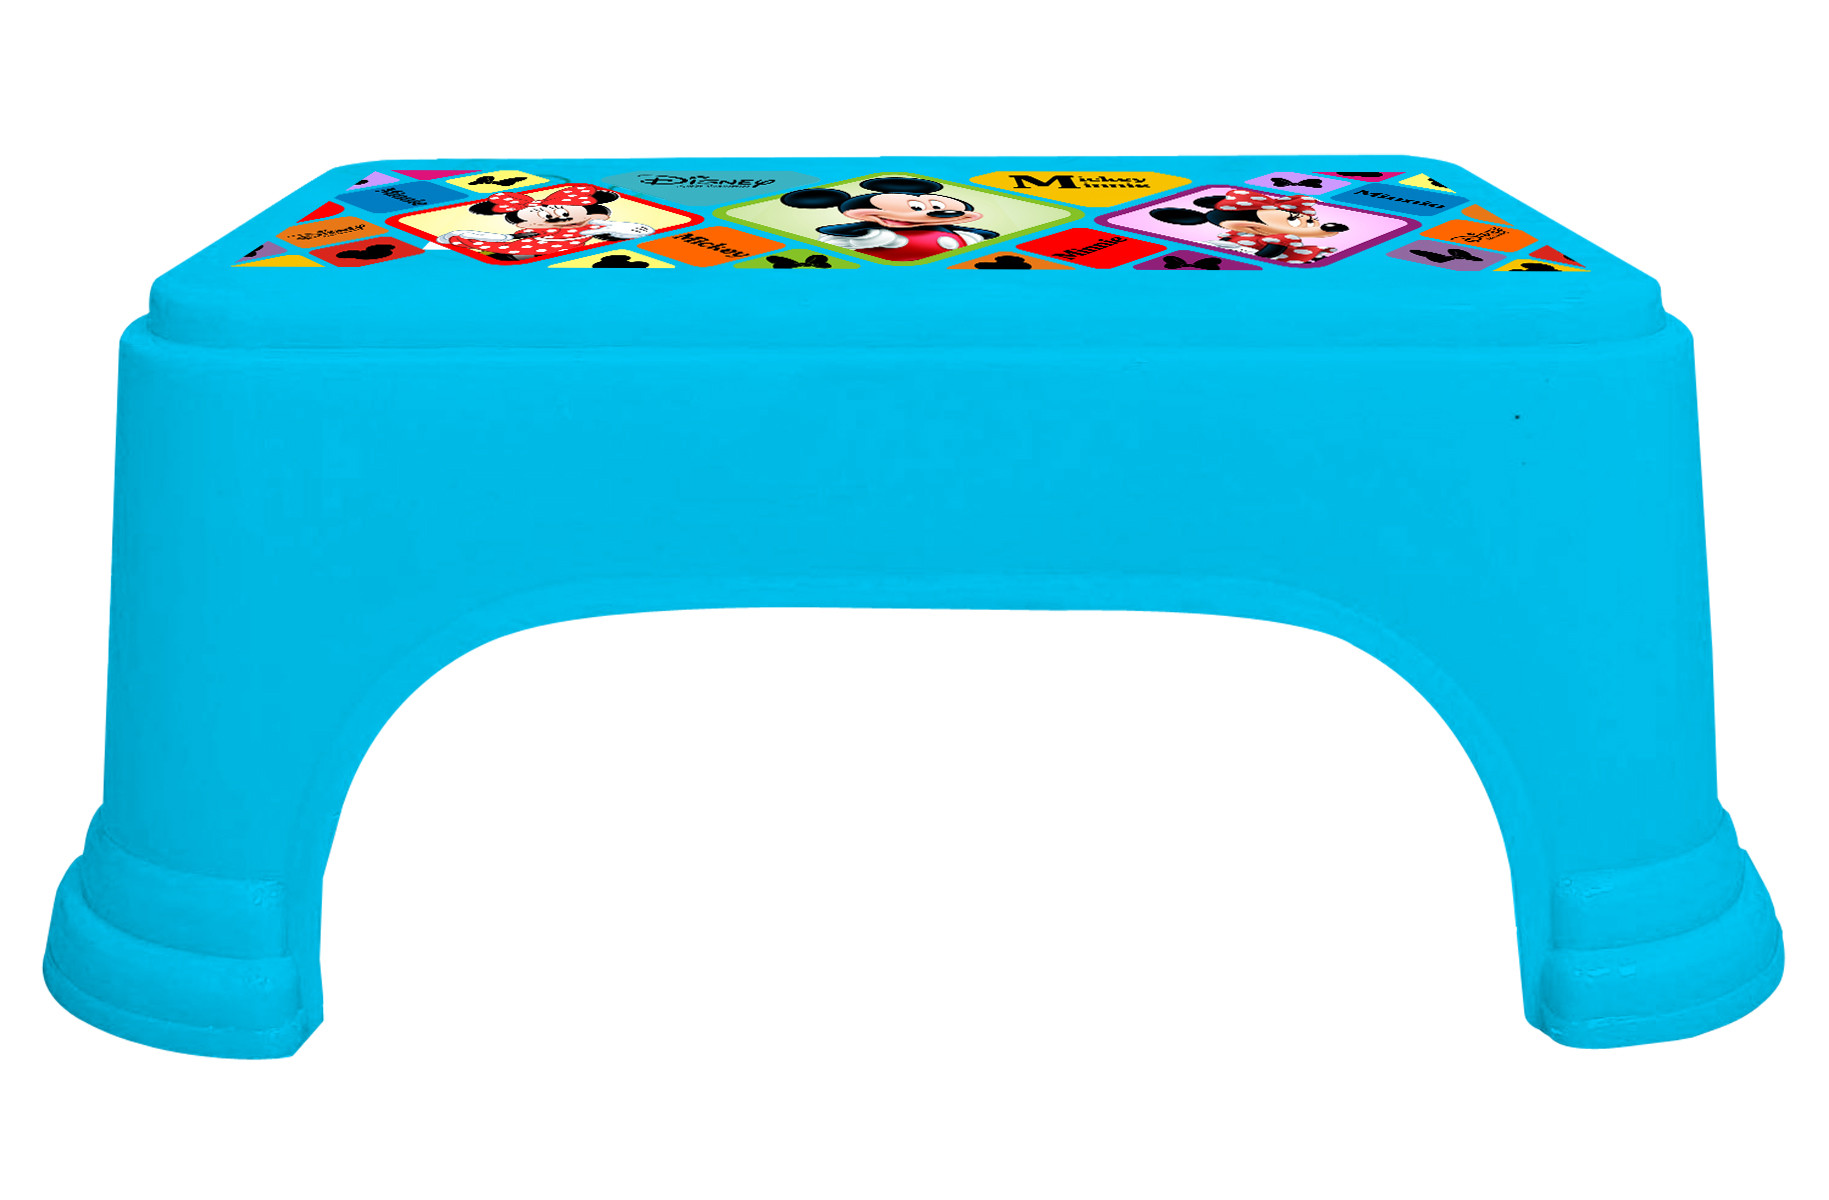 Kuber Industries Disney Mickey Minnie Print Square Plastic Bathroom Stool (Set of 2, Blue & White) -HS_35_KUBMART17739